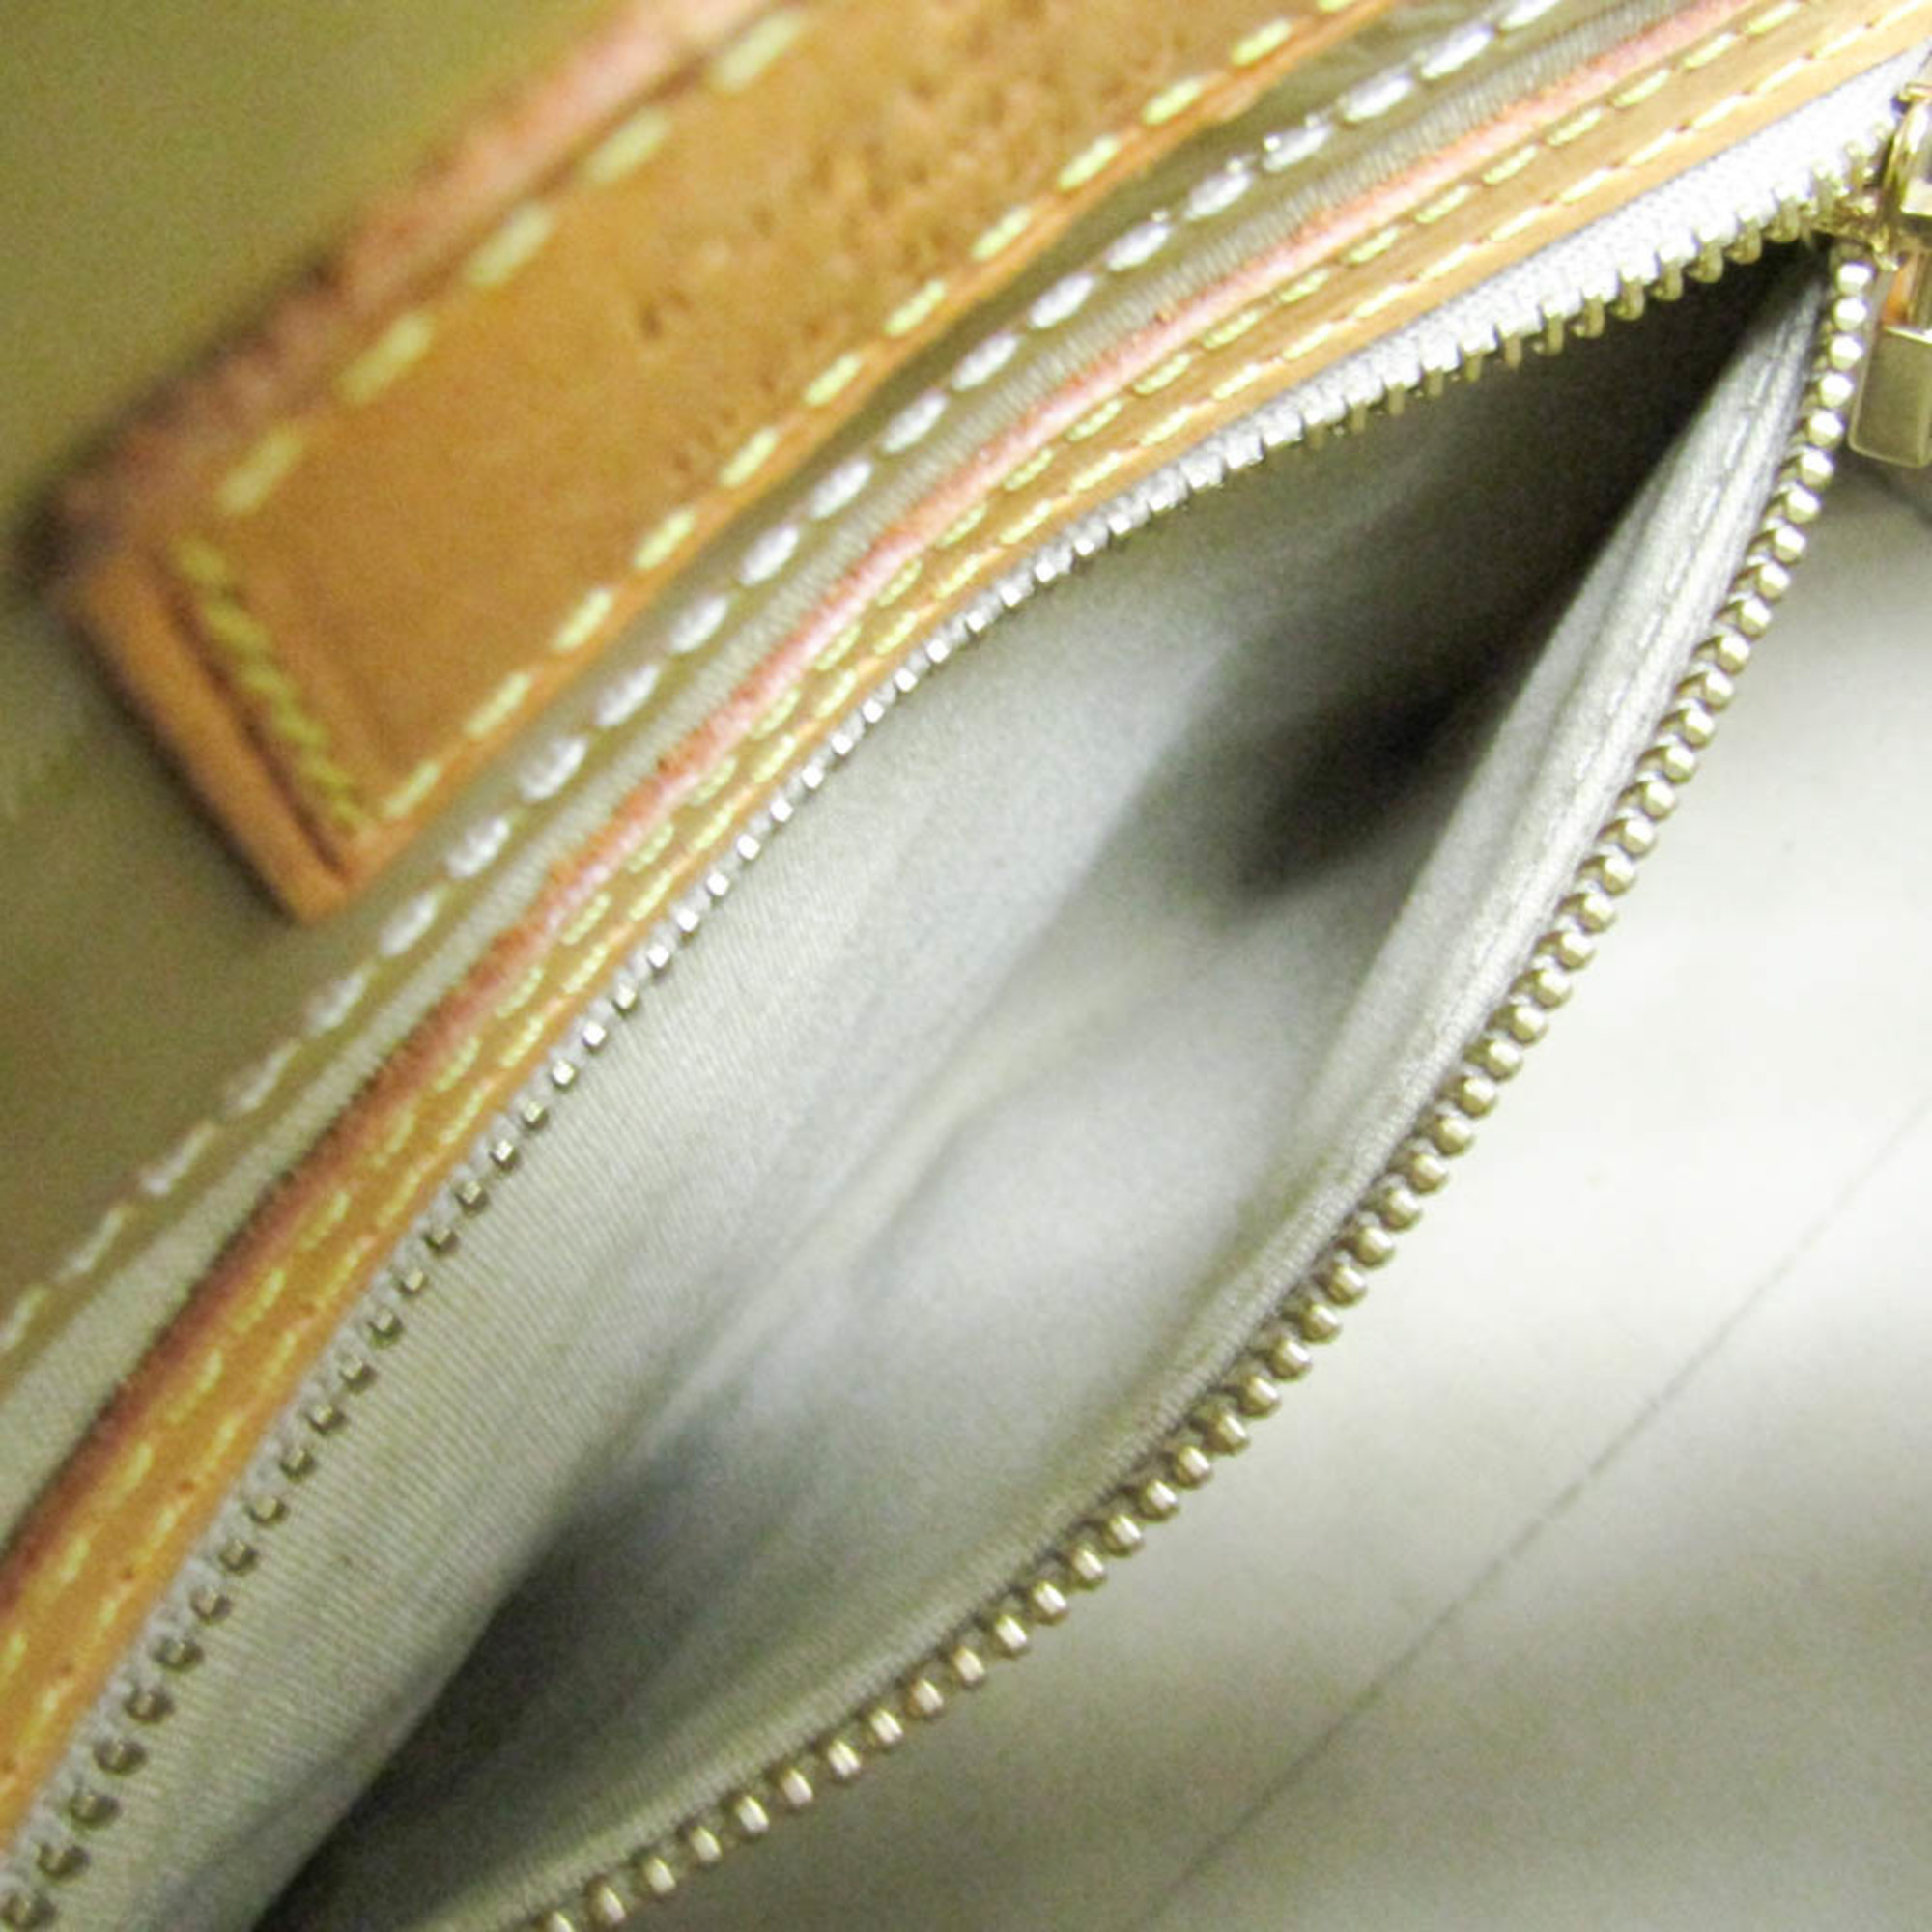 Louis Vuitton Monogram Vernis Reade PM M91144 Women's Handbag Soft Beige